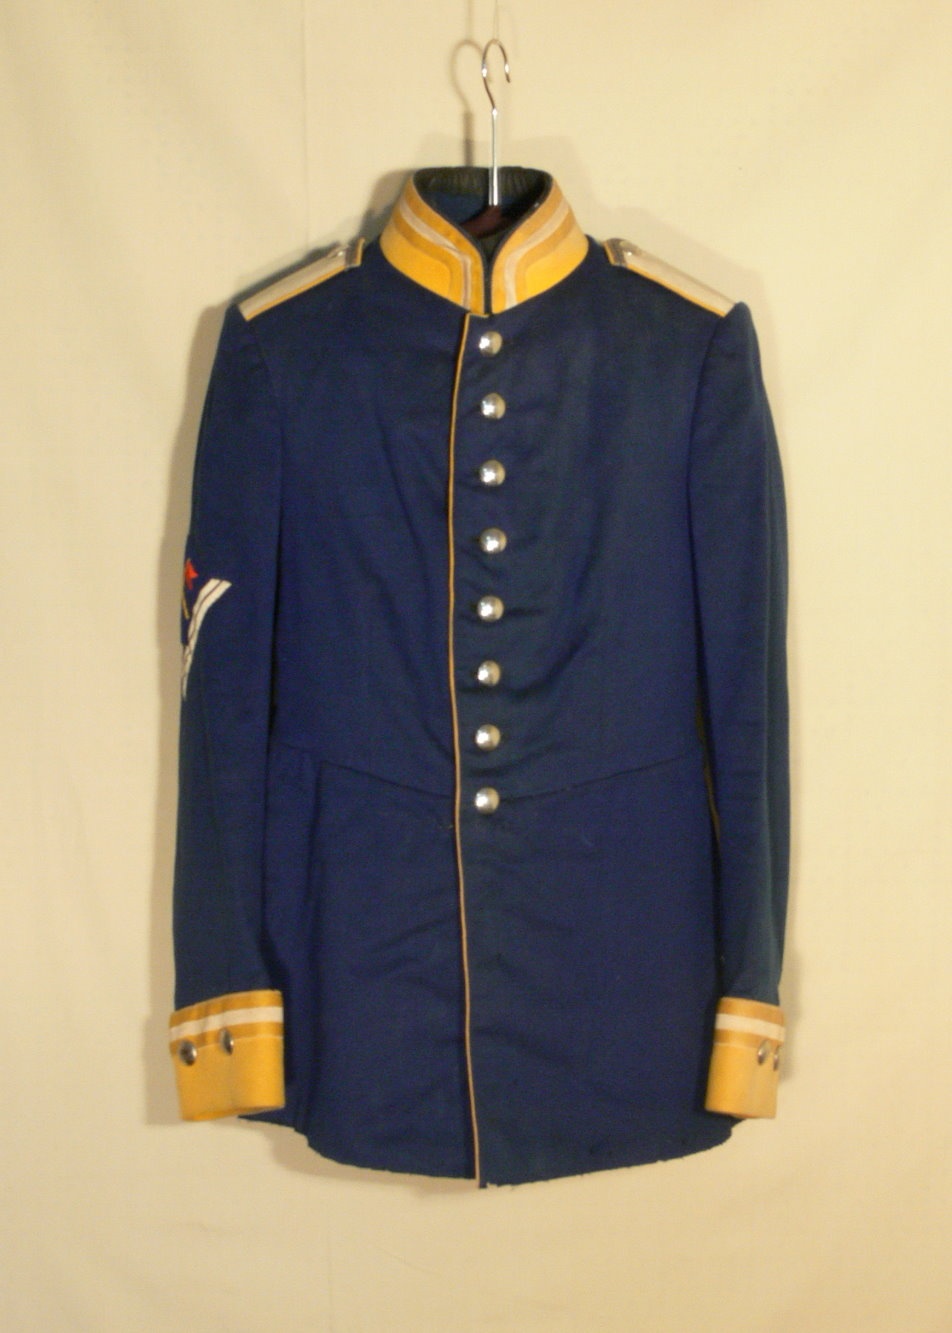 Uniformjacke (Museumsverband Sachsen-Anhalt e. V. CC BY-NC-SA)